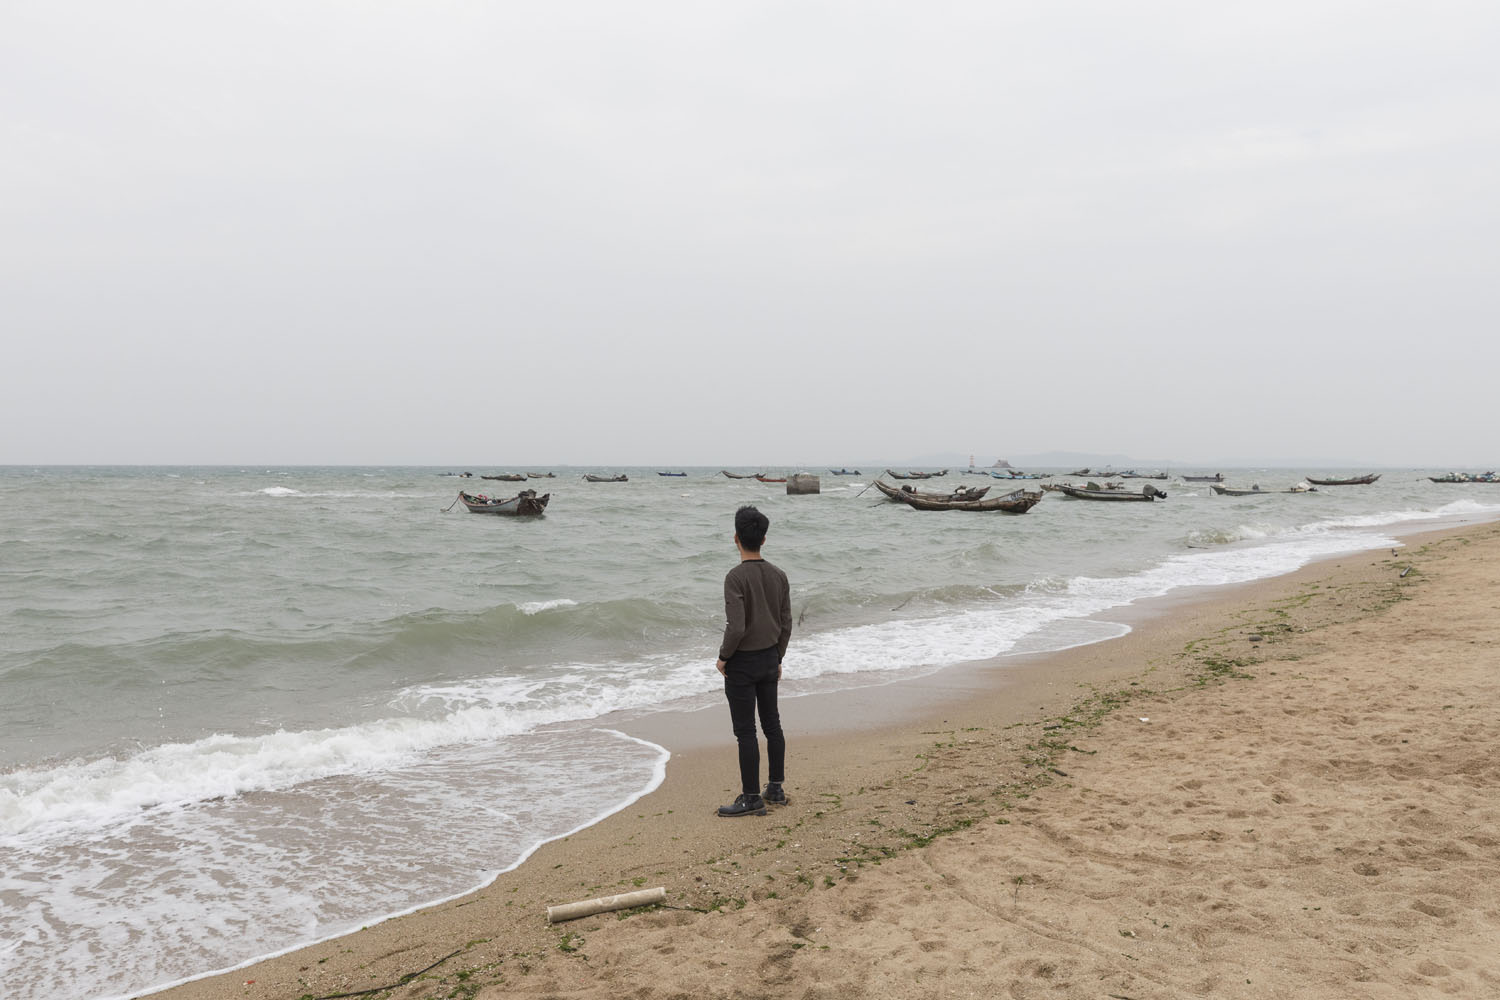 Man looks out toward the ocean at Guanyinshan Fantasy Beach. Xiamen, China. 2018.